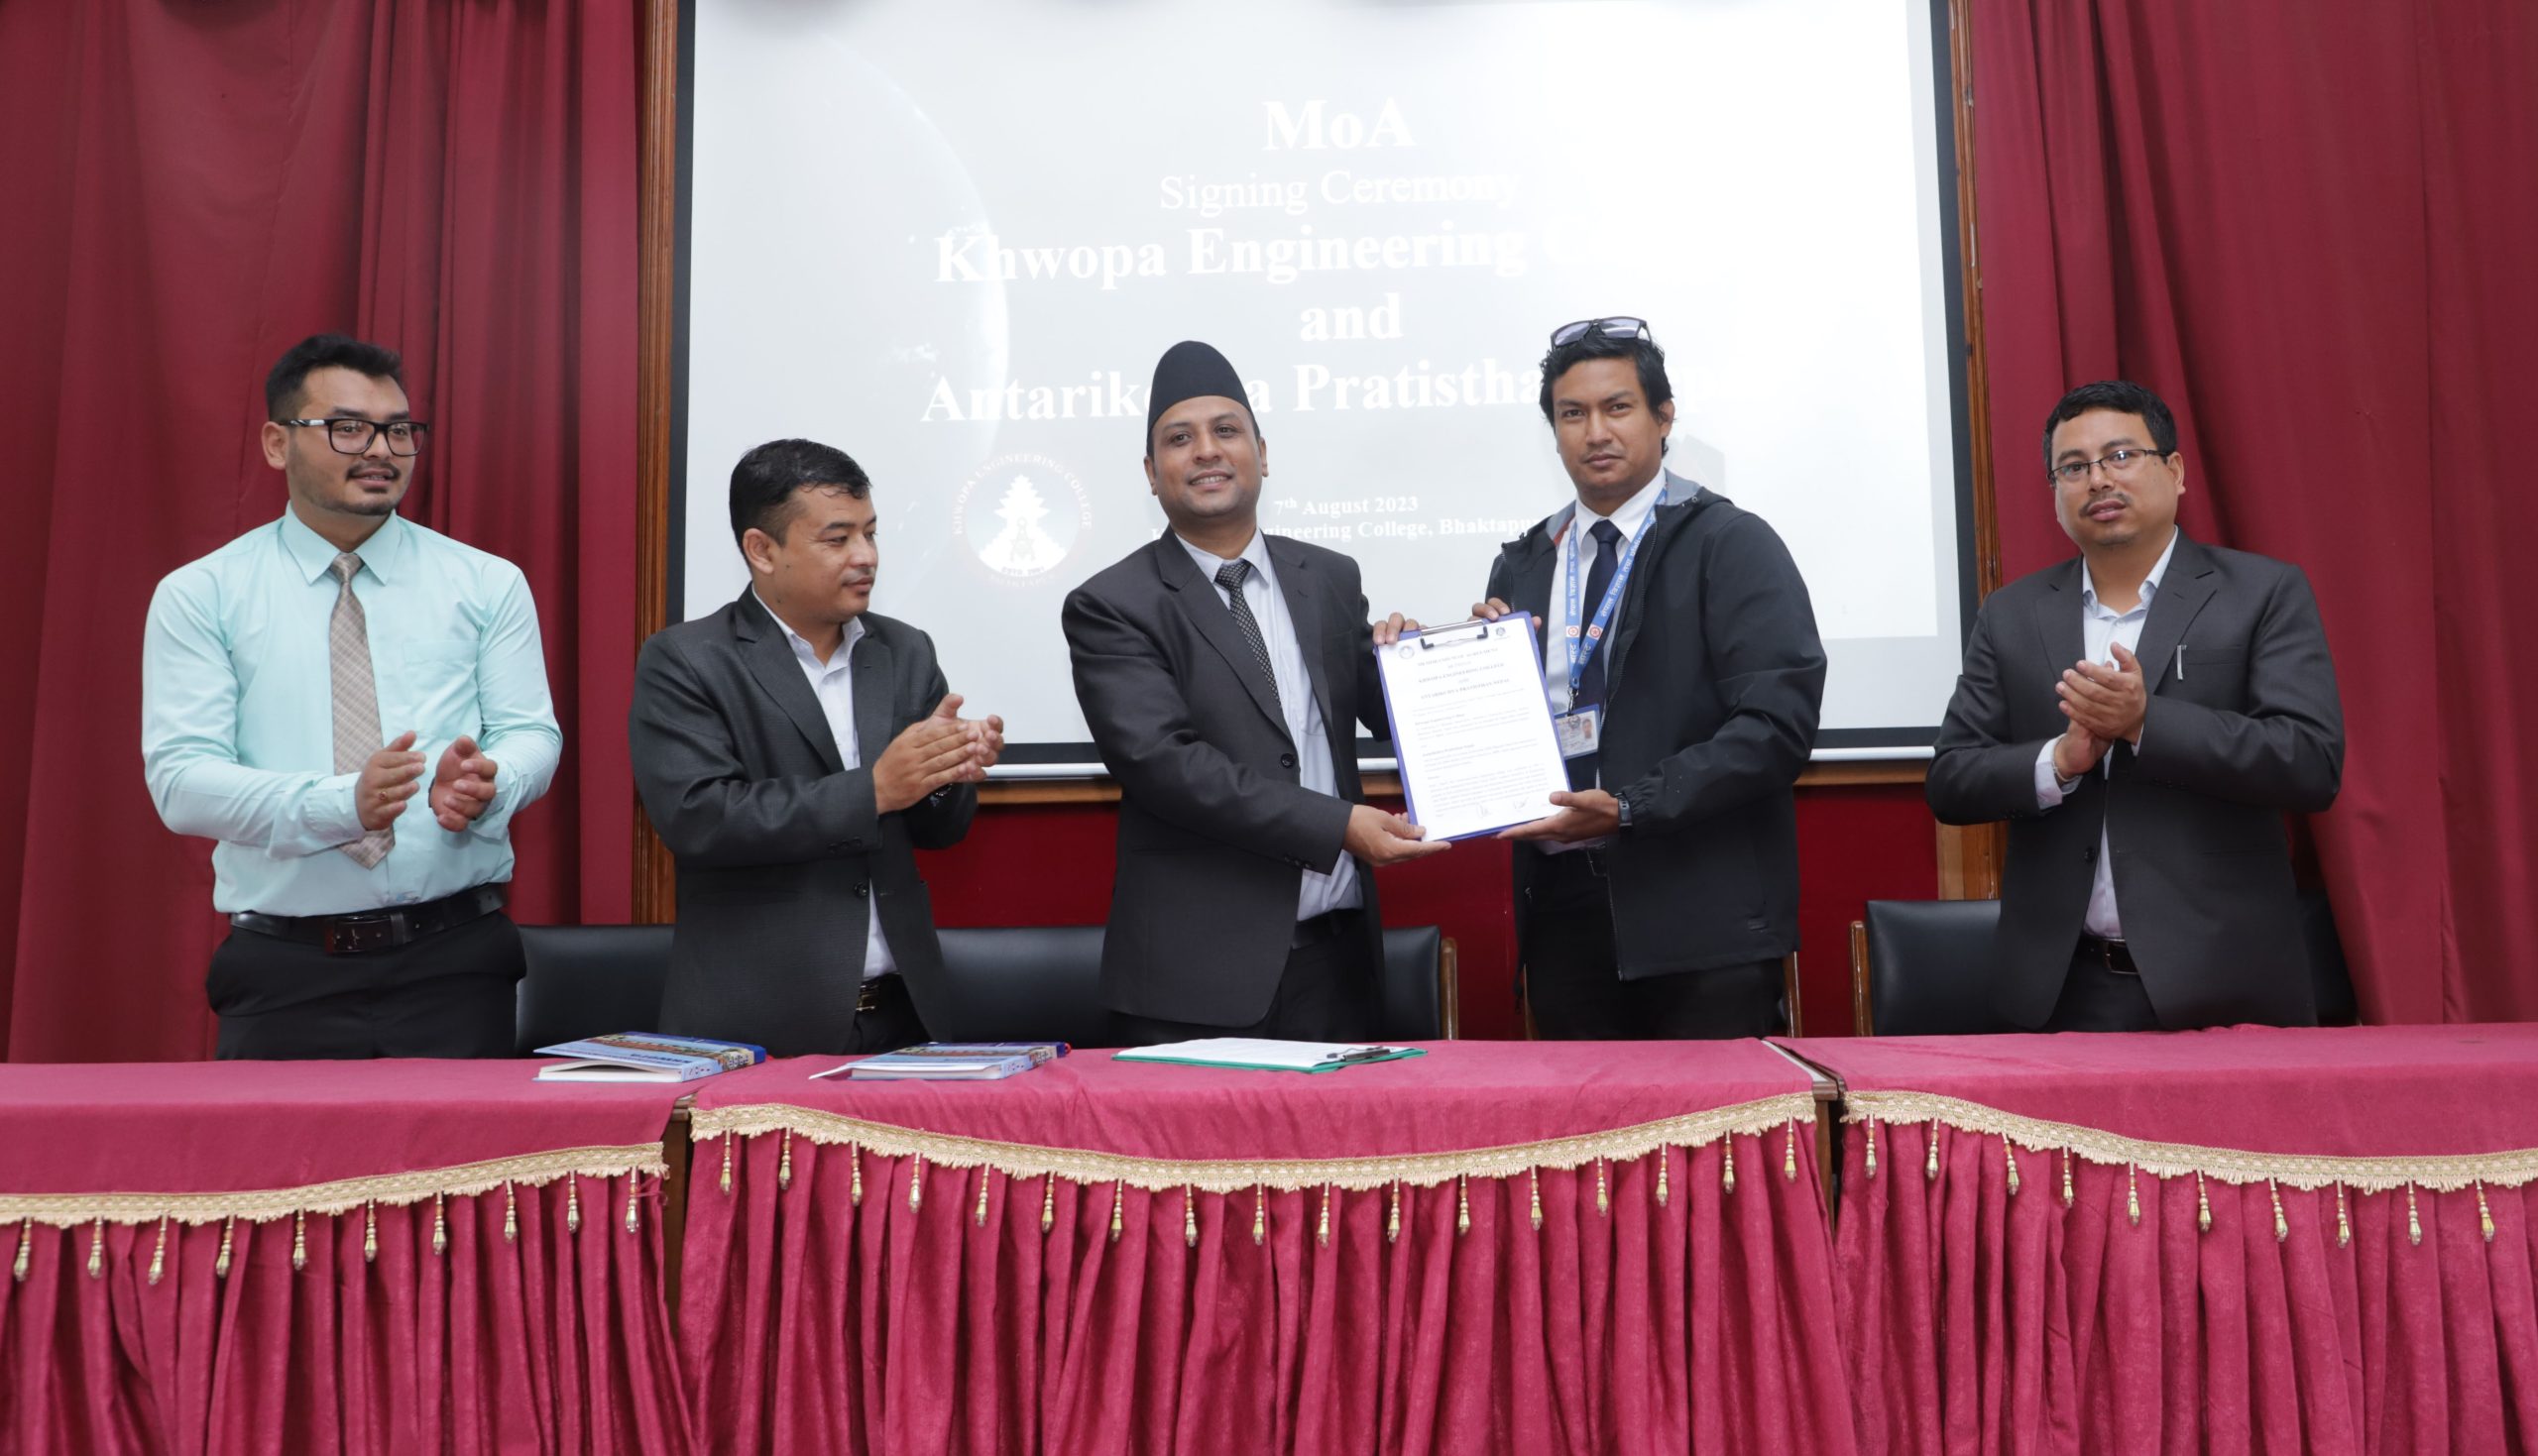 MoA Signing Ceremony Between Khwopa Engineering College and Antarikchya Pratisthan Nepal (APN)